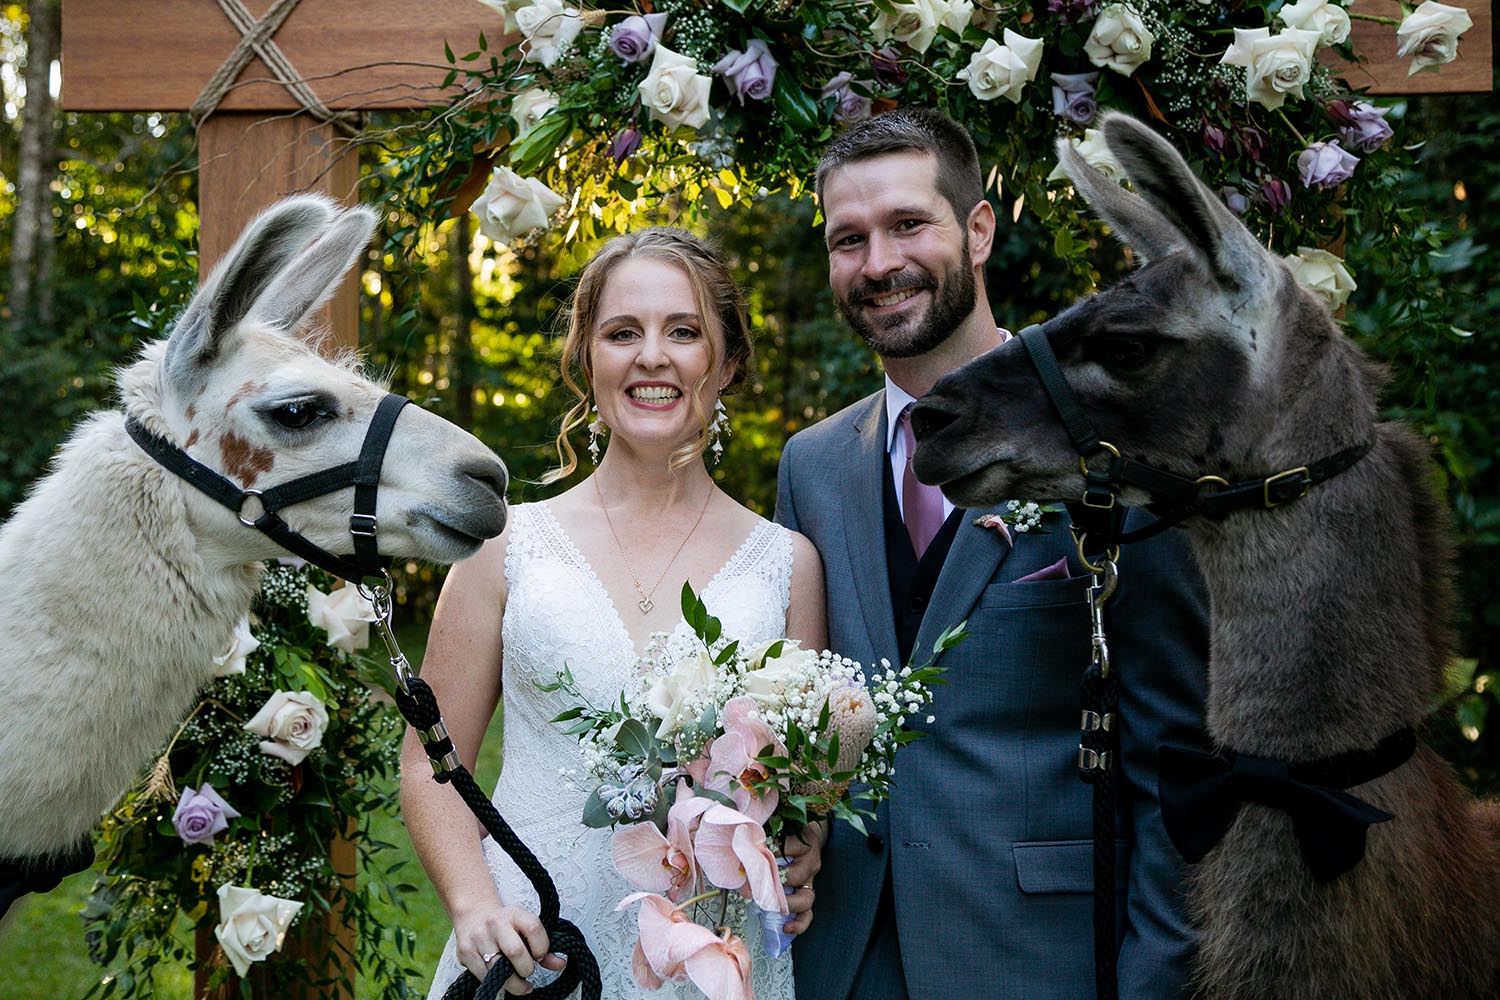 Wedding Photography - Couple with Alpacas closeup